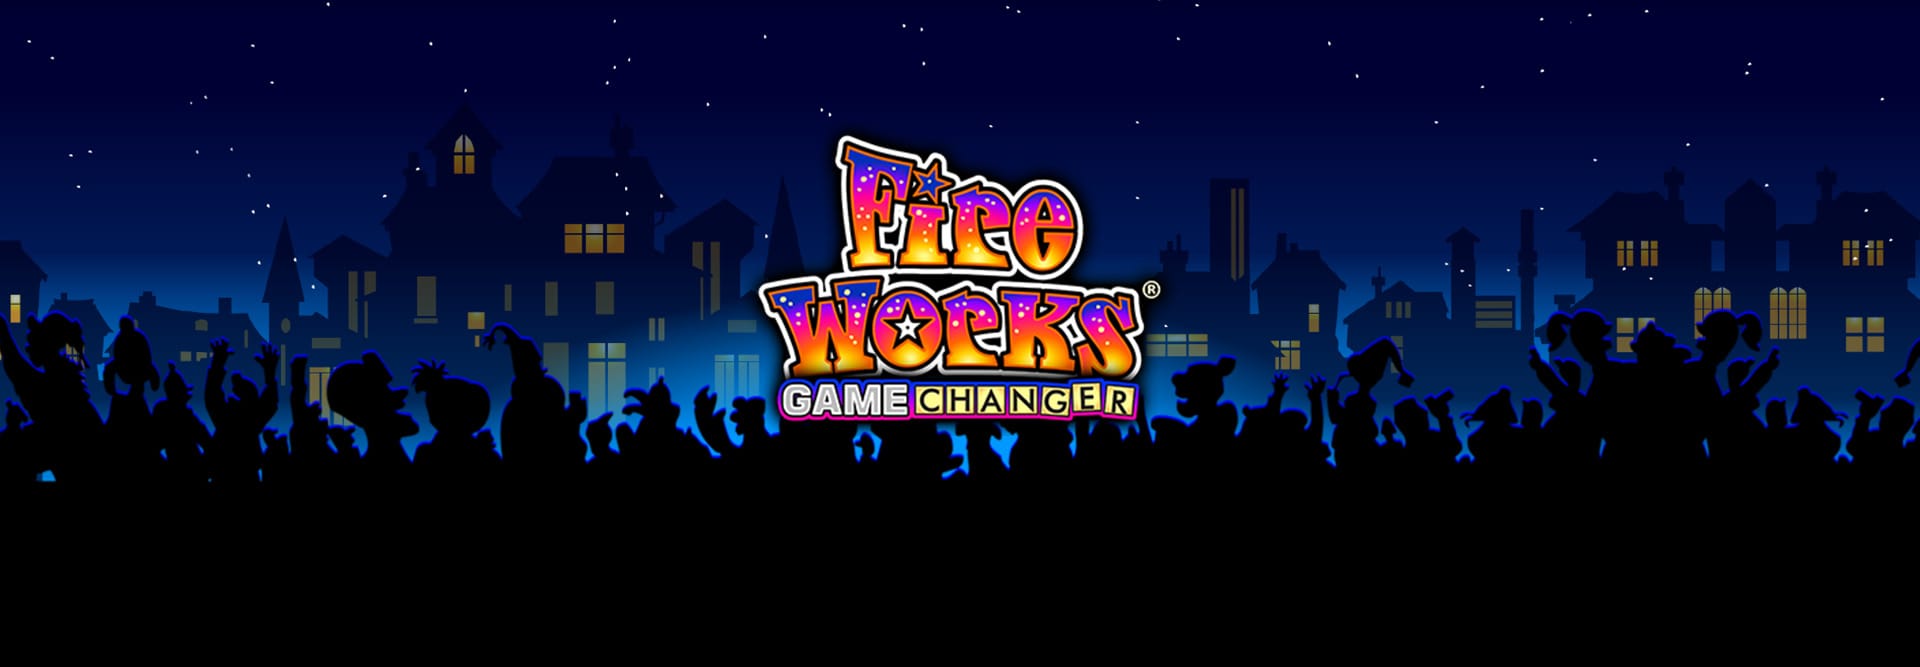 Fireworks Game Changer - Game Banner